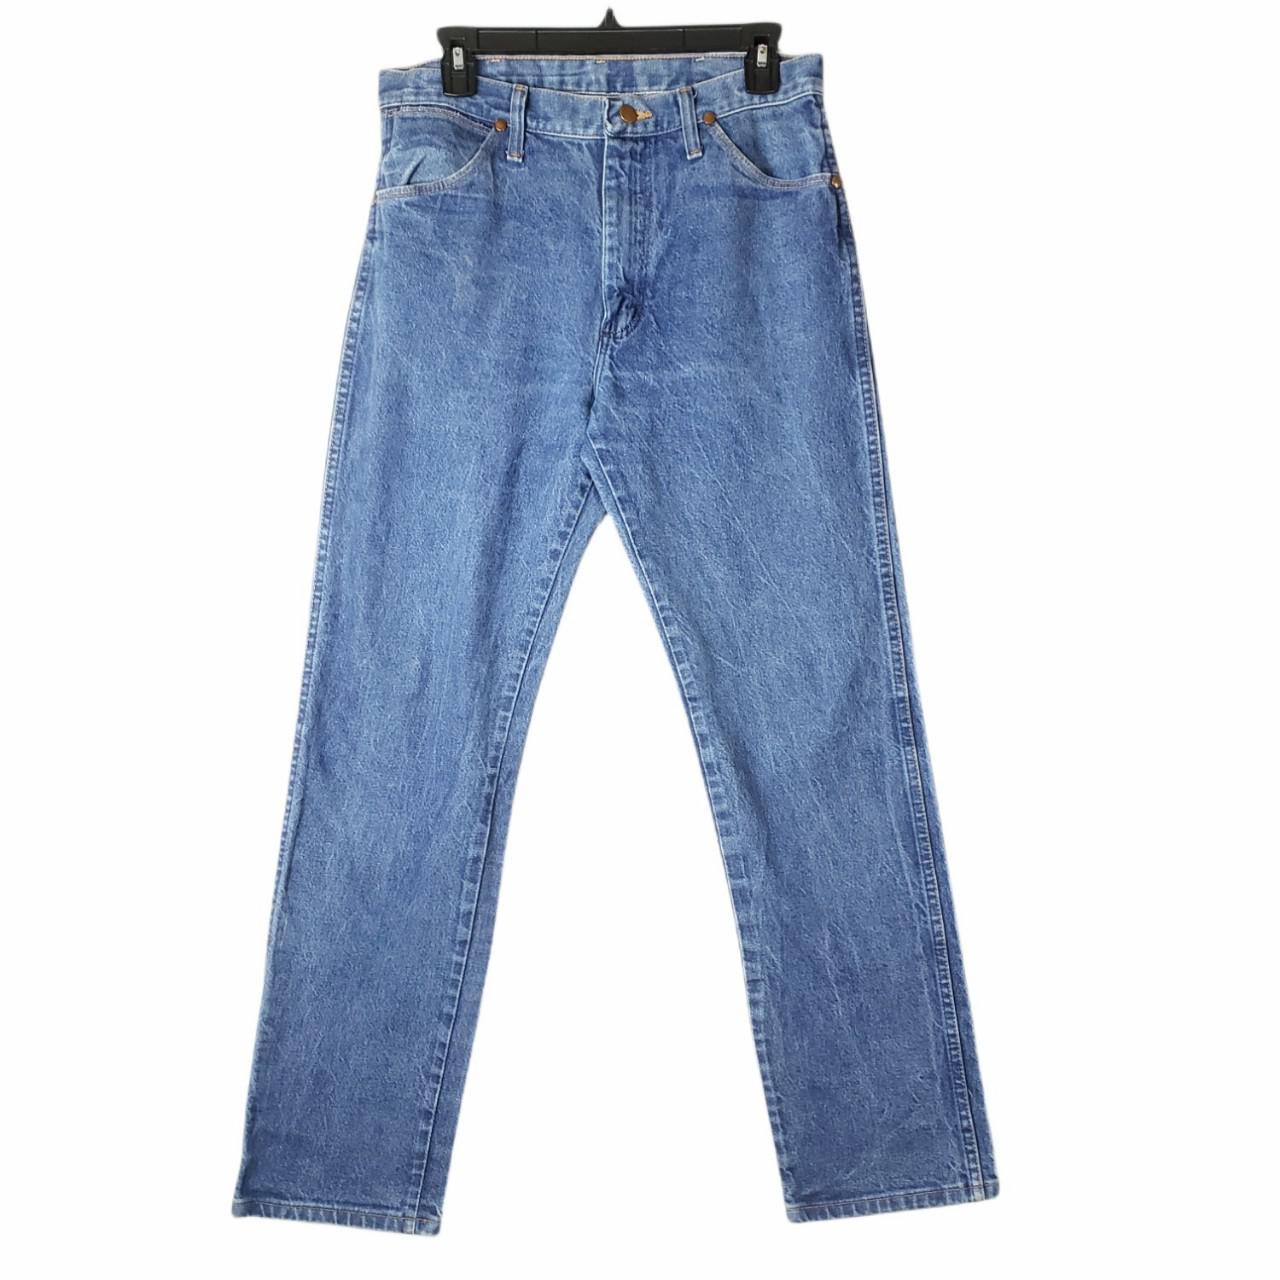 Wrangler Jeans Made in USA In excellent... - Depop